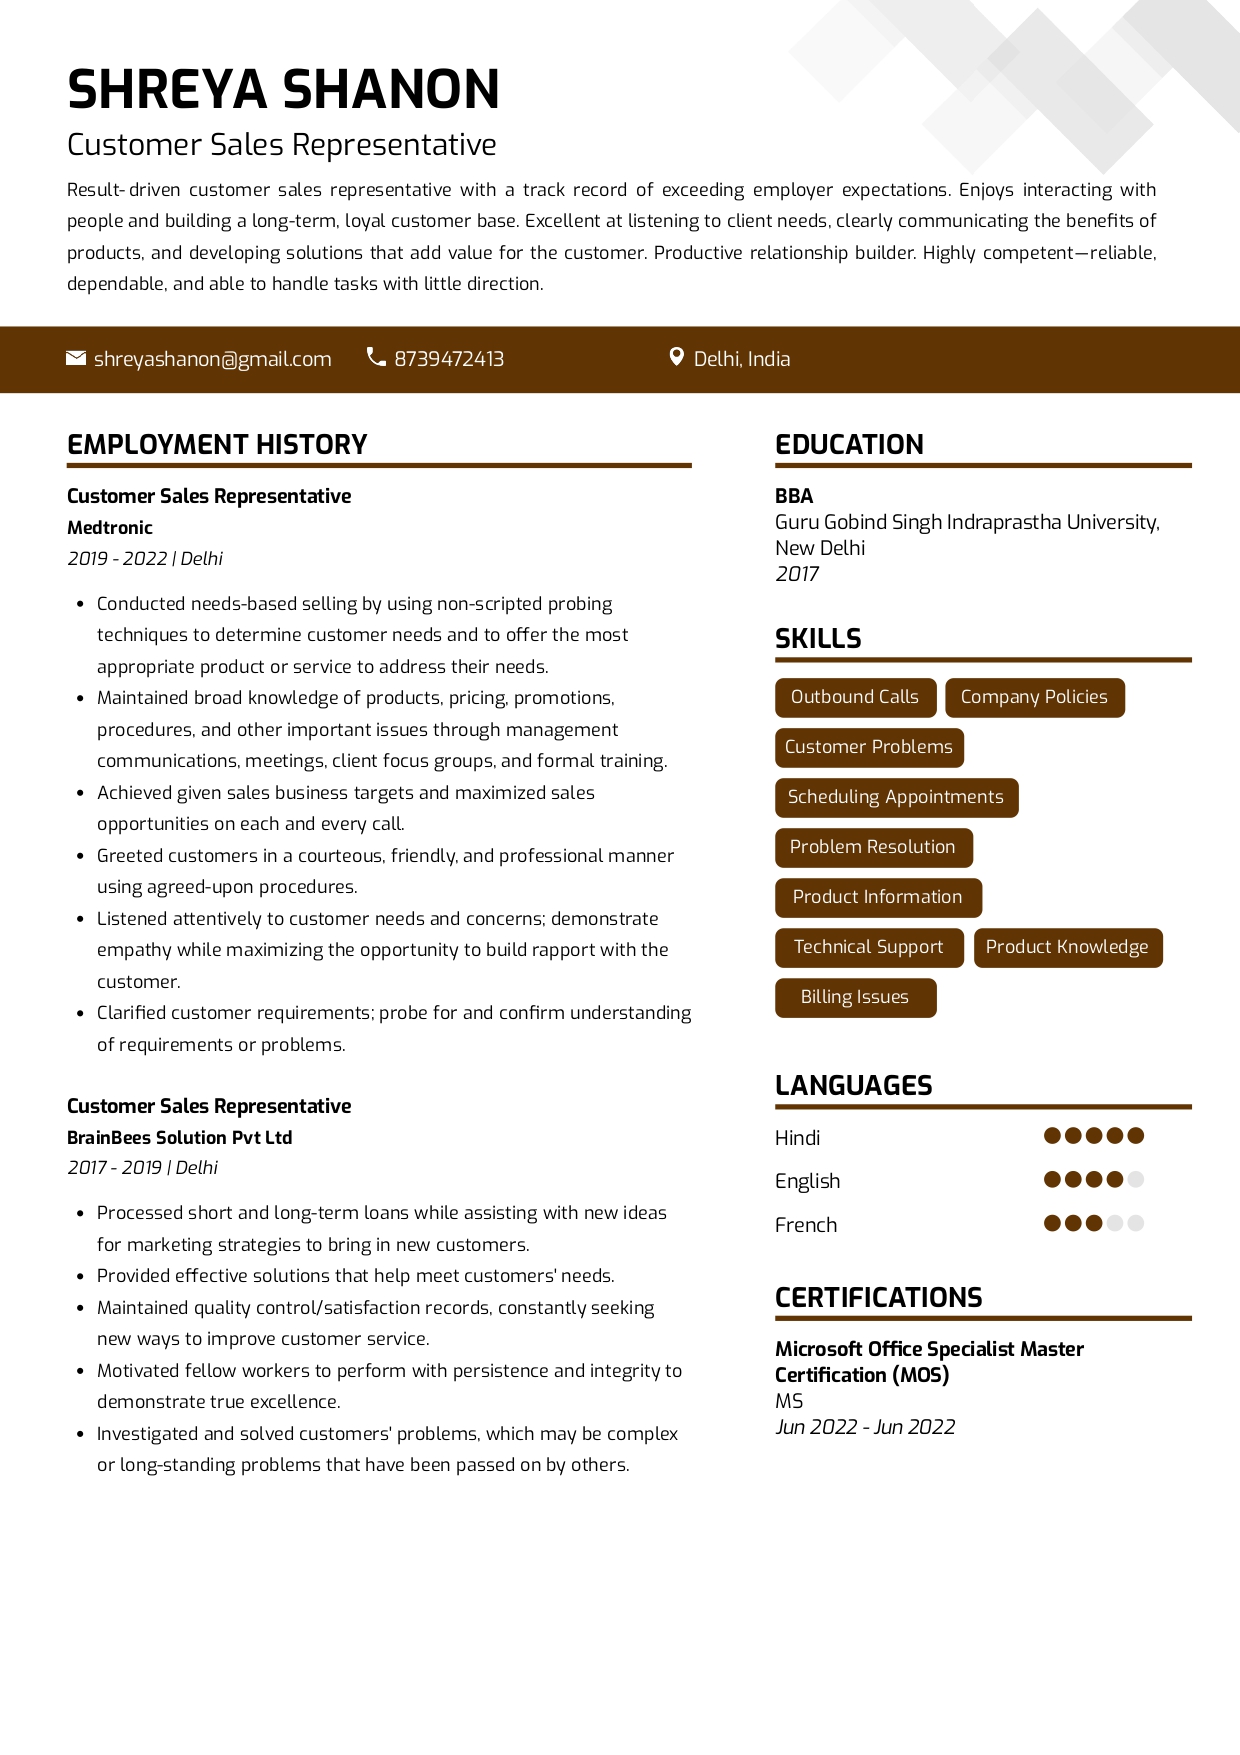 Resume of Customer Sales Representative